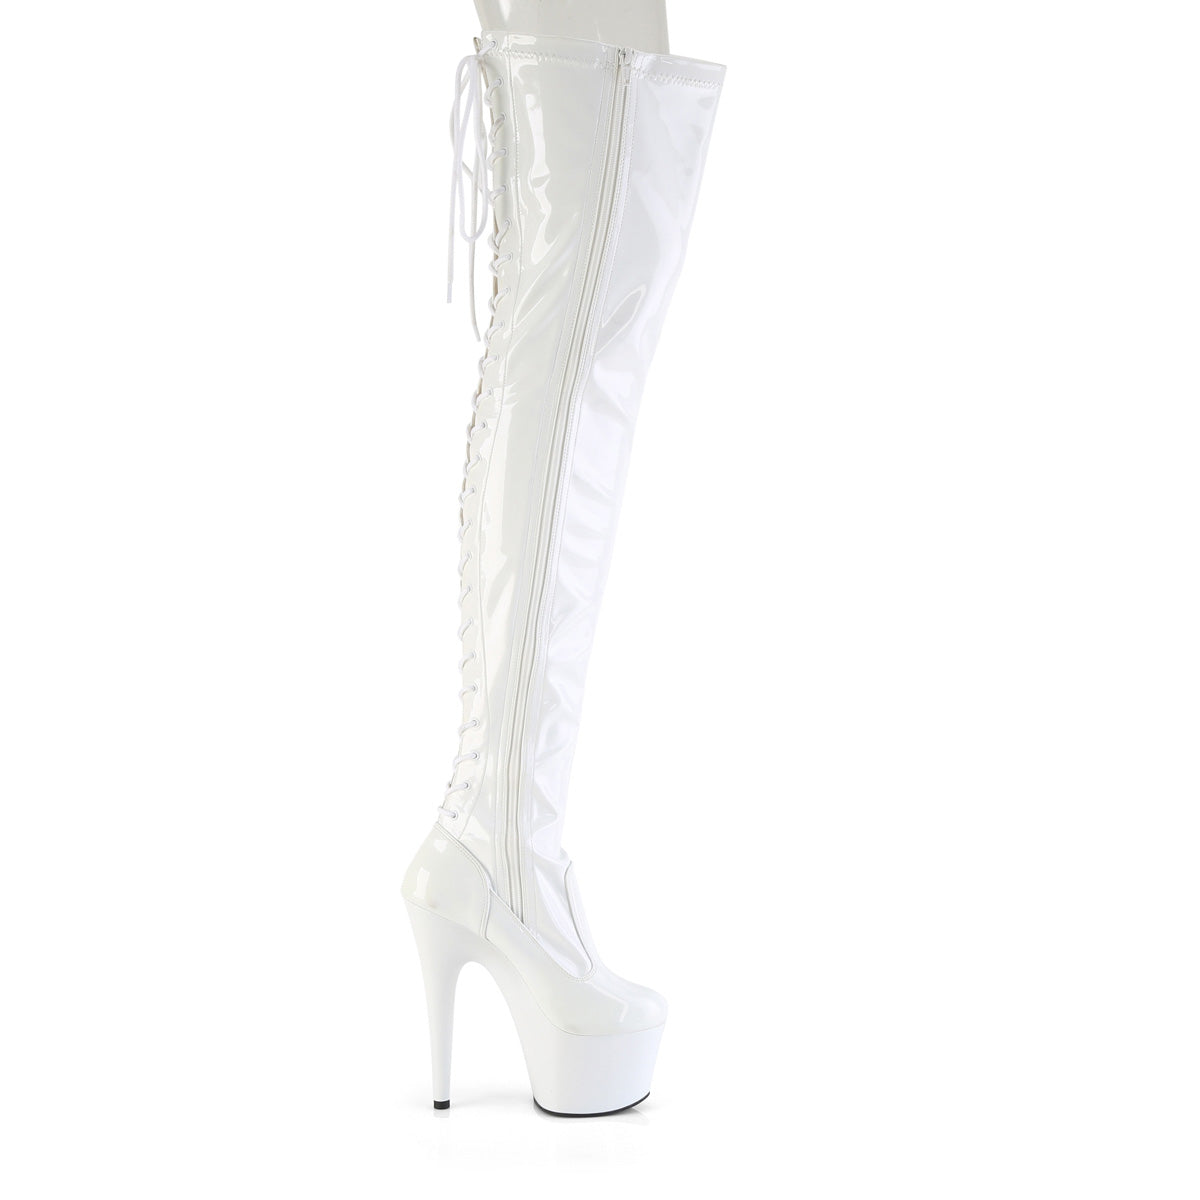 7 Inch Heel ADORE-3850 White Patent